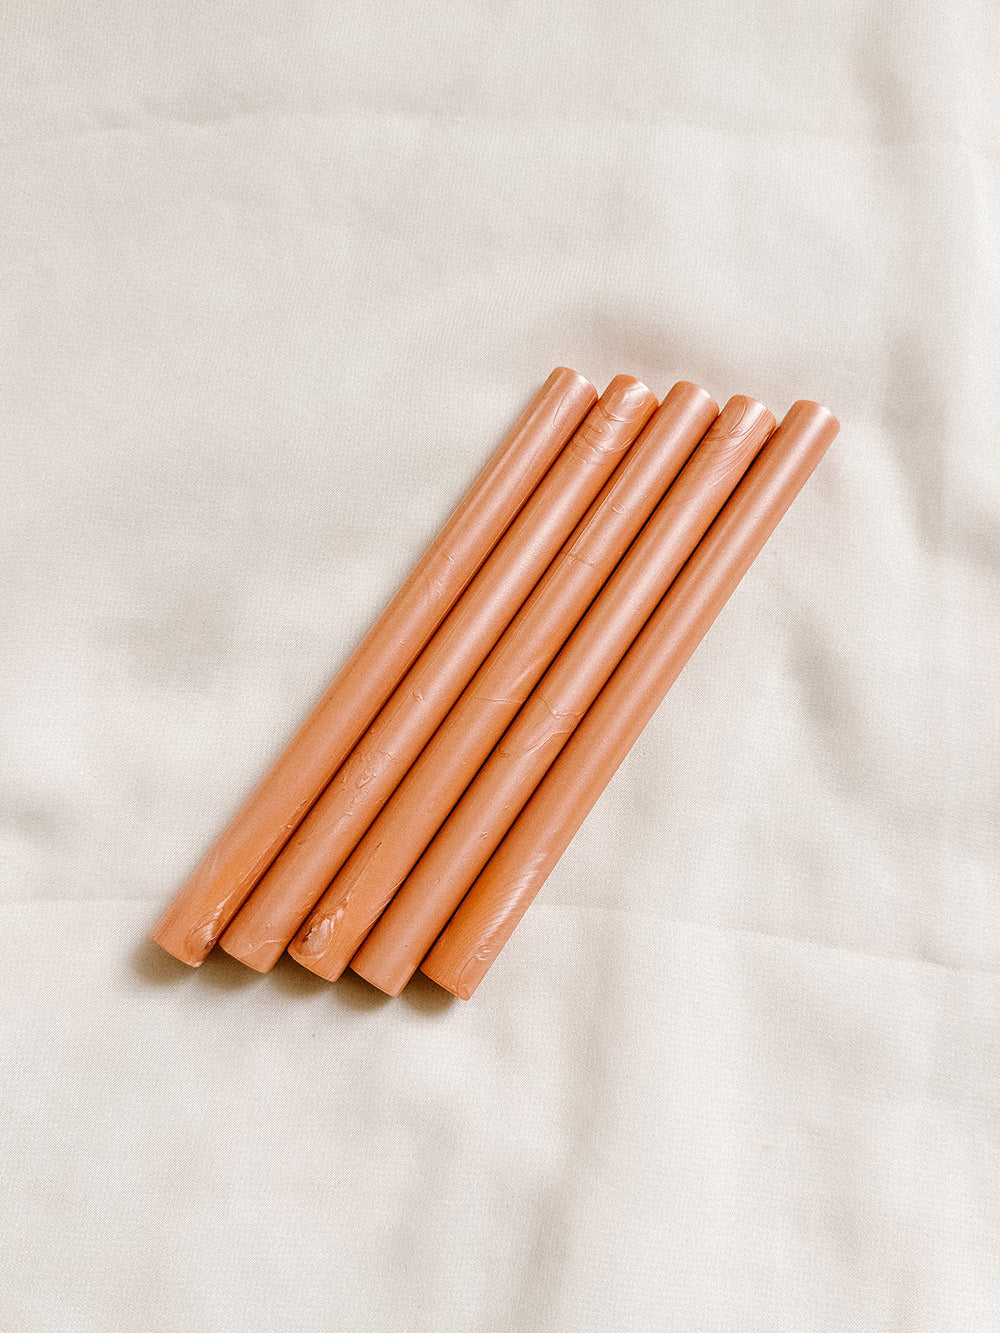 Metallic Peach sealing wax sticks